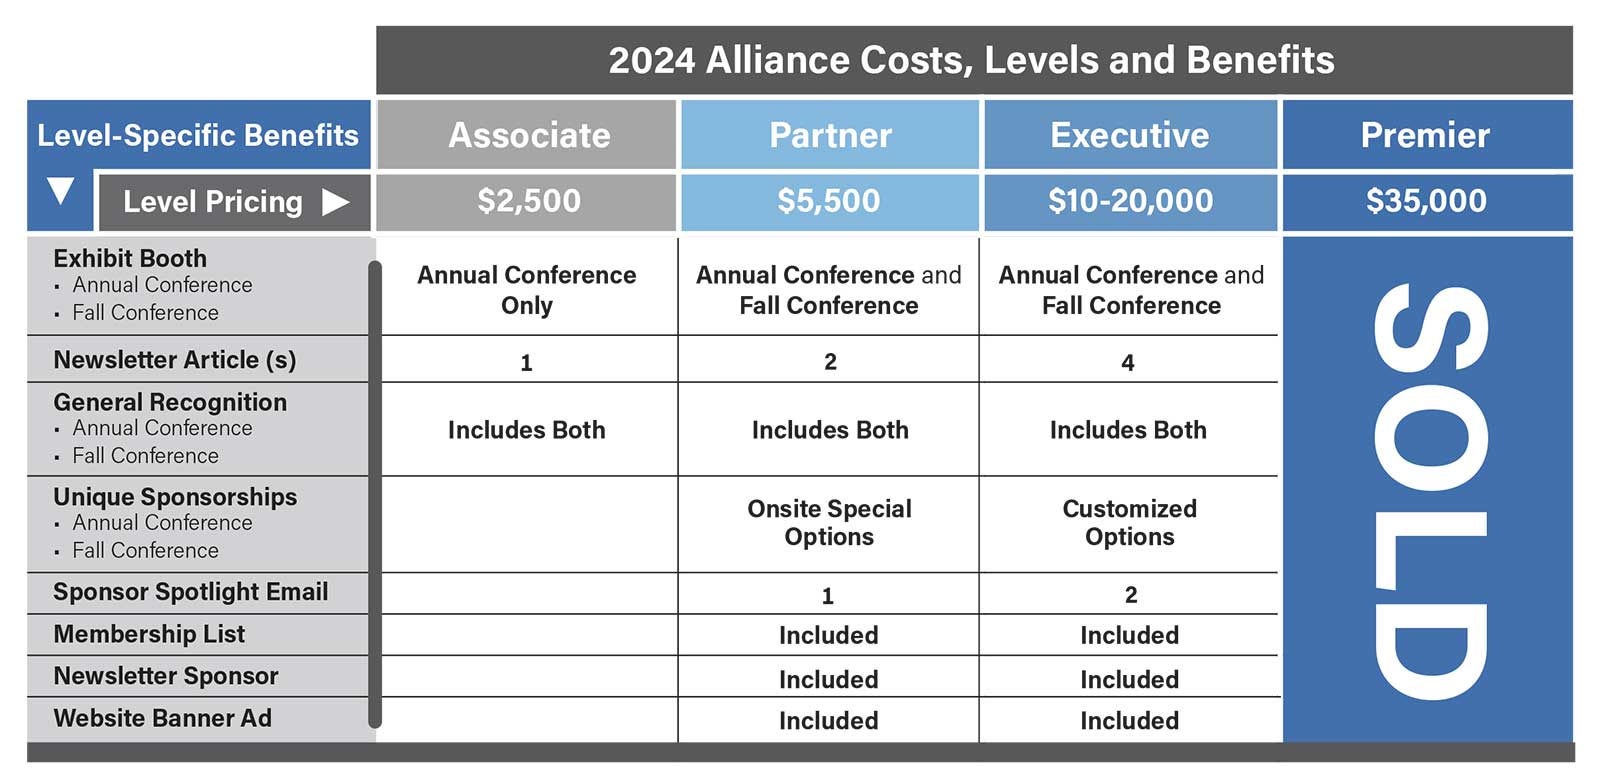 2024 Alliance Benefits Table